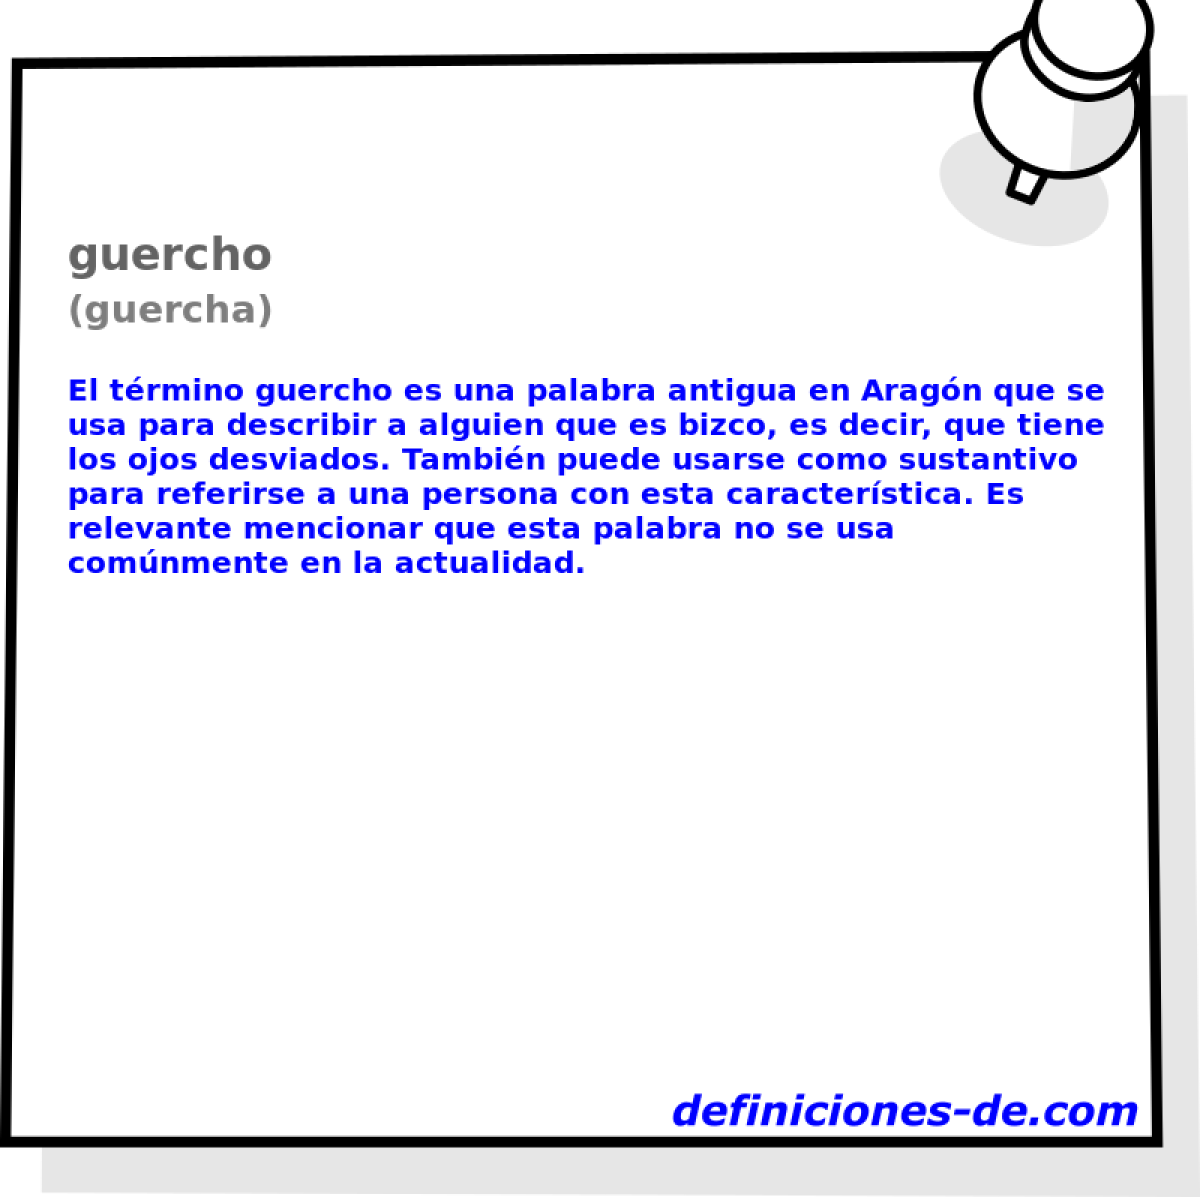 guercho (guercha)